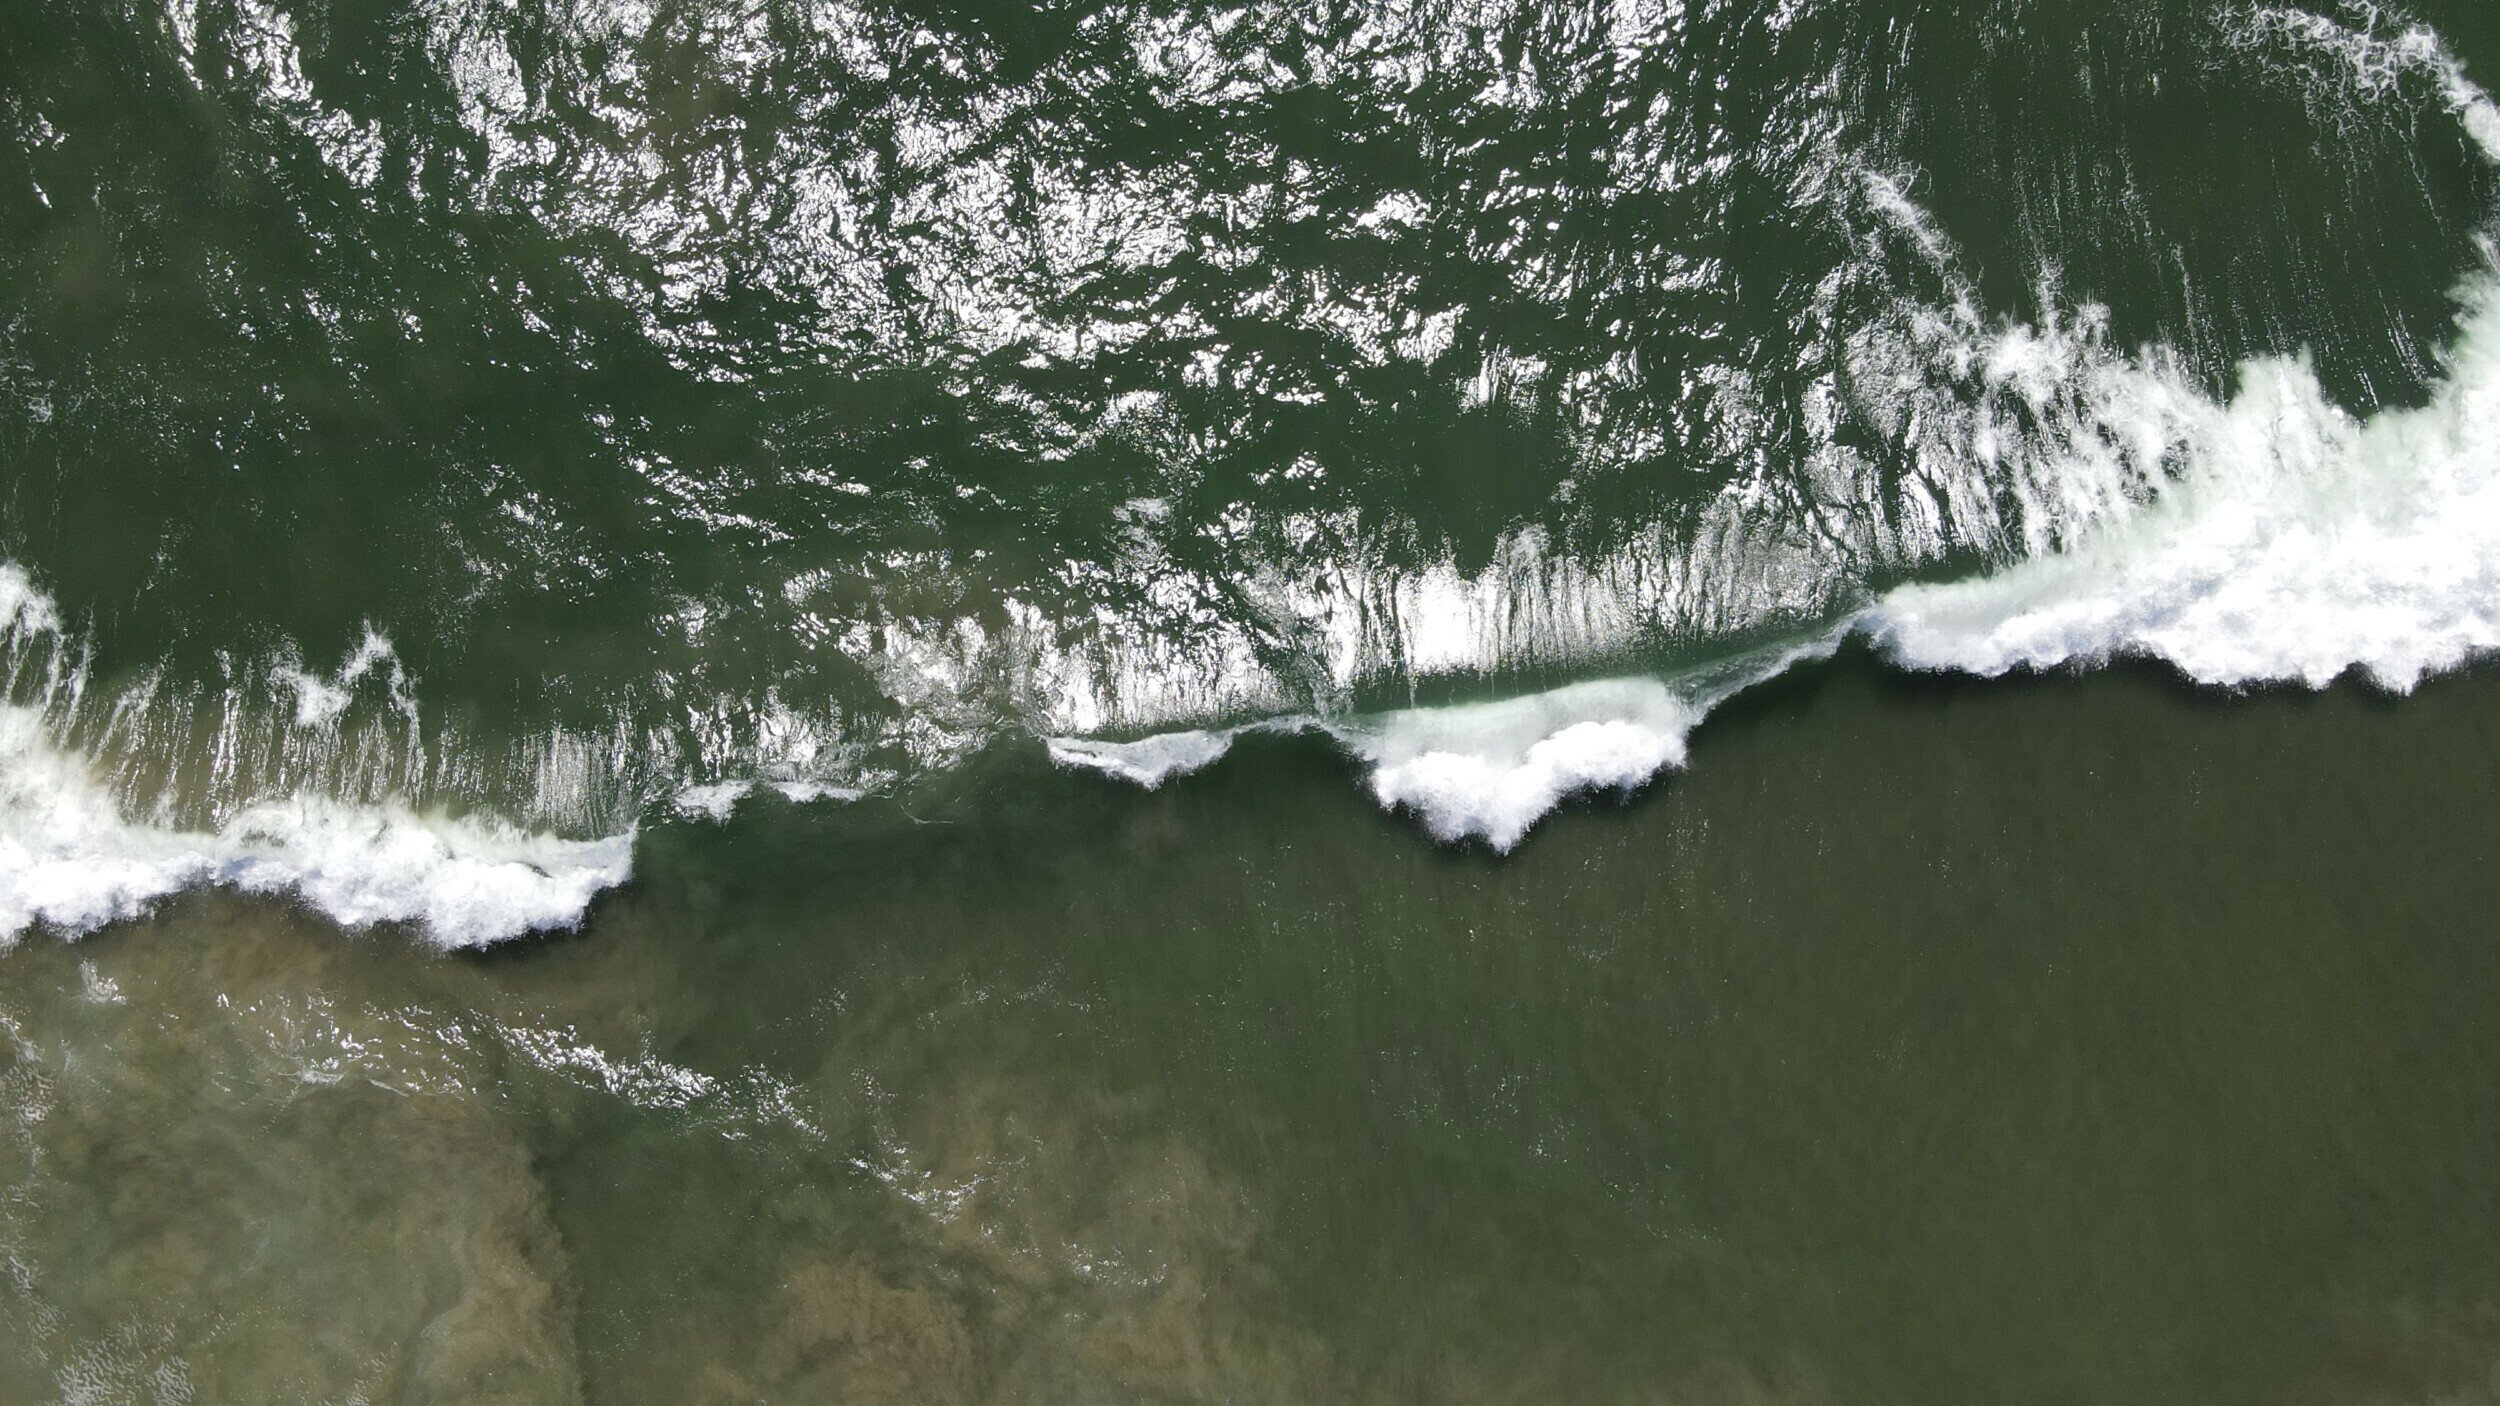 Overhead view of breaking waves captured by the DJI Mavic Air 2 at Malibu Beach, California